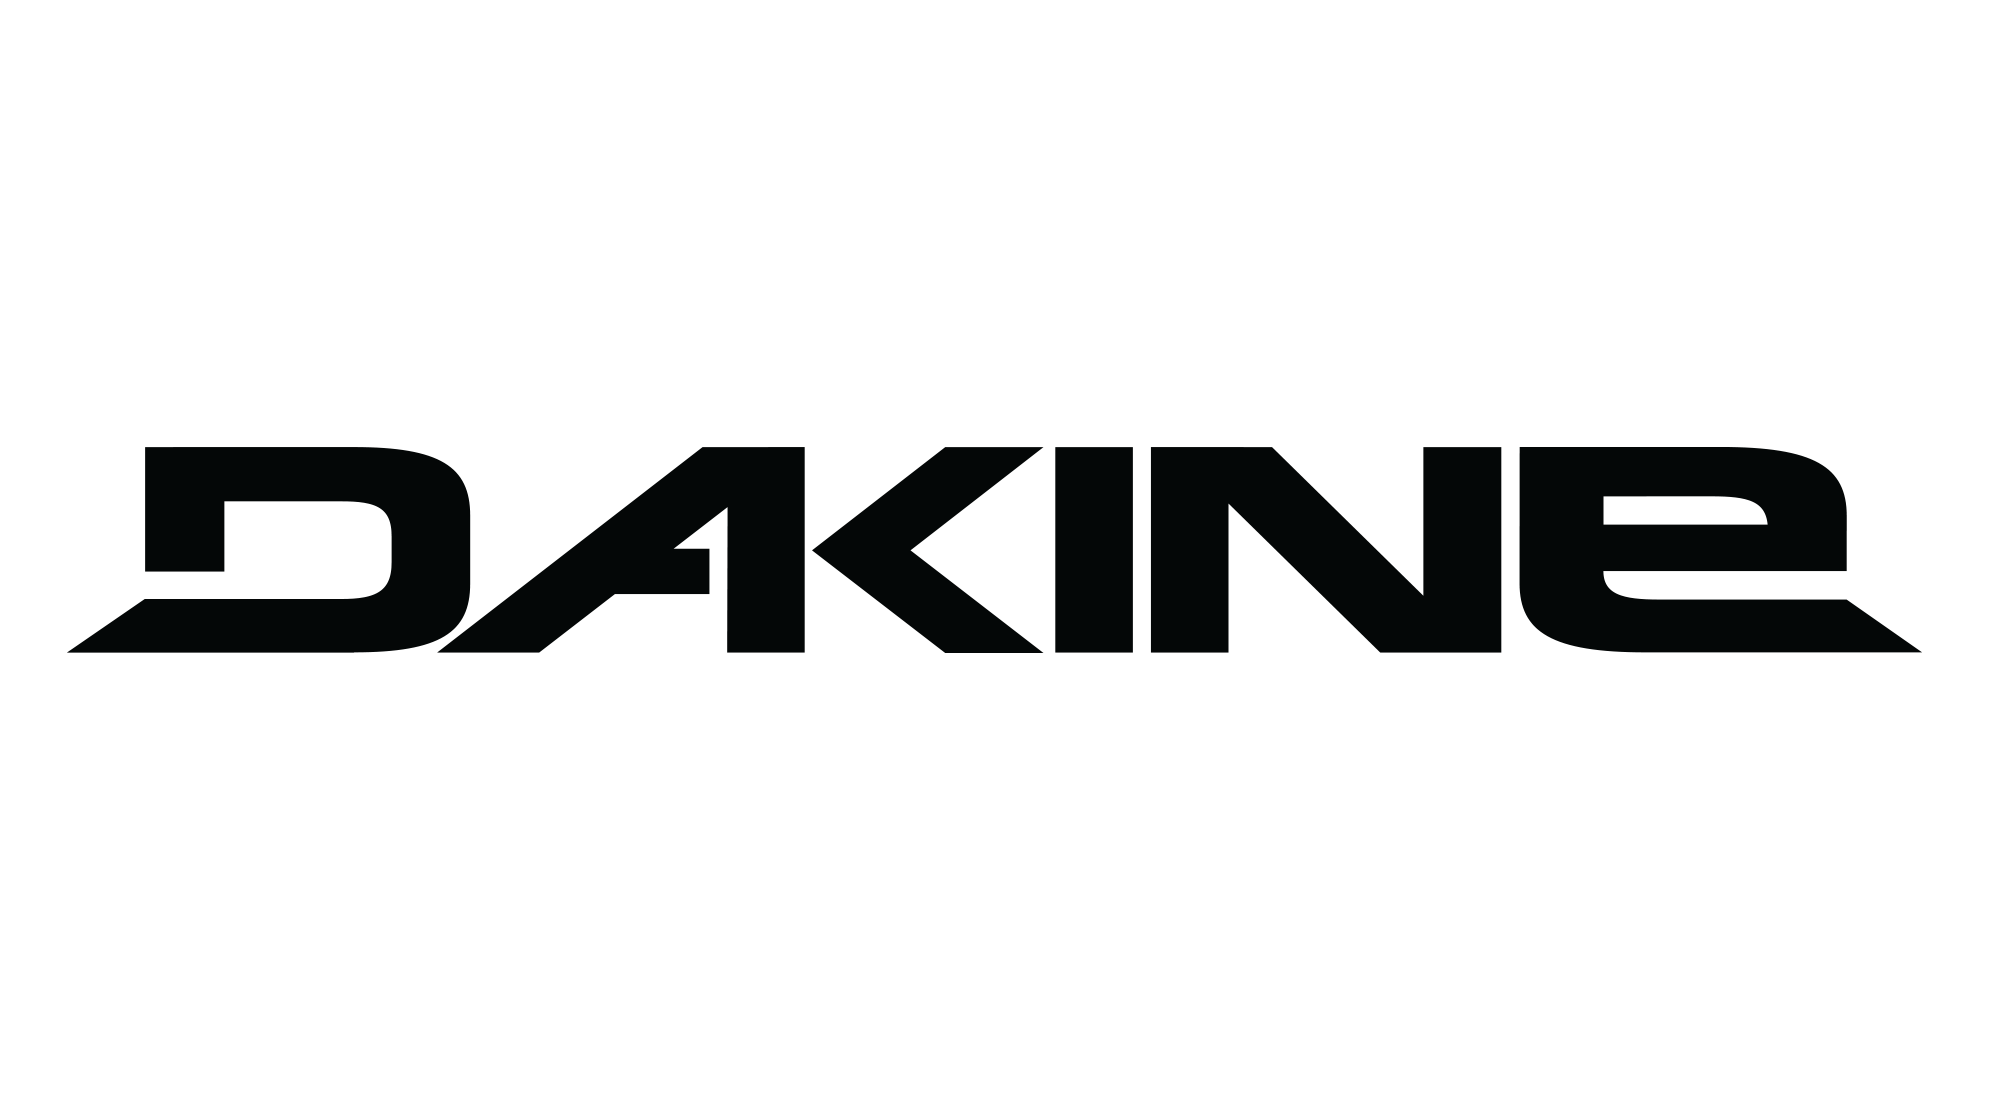 Dakine Logo